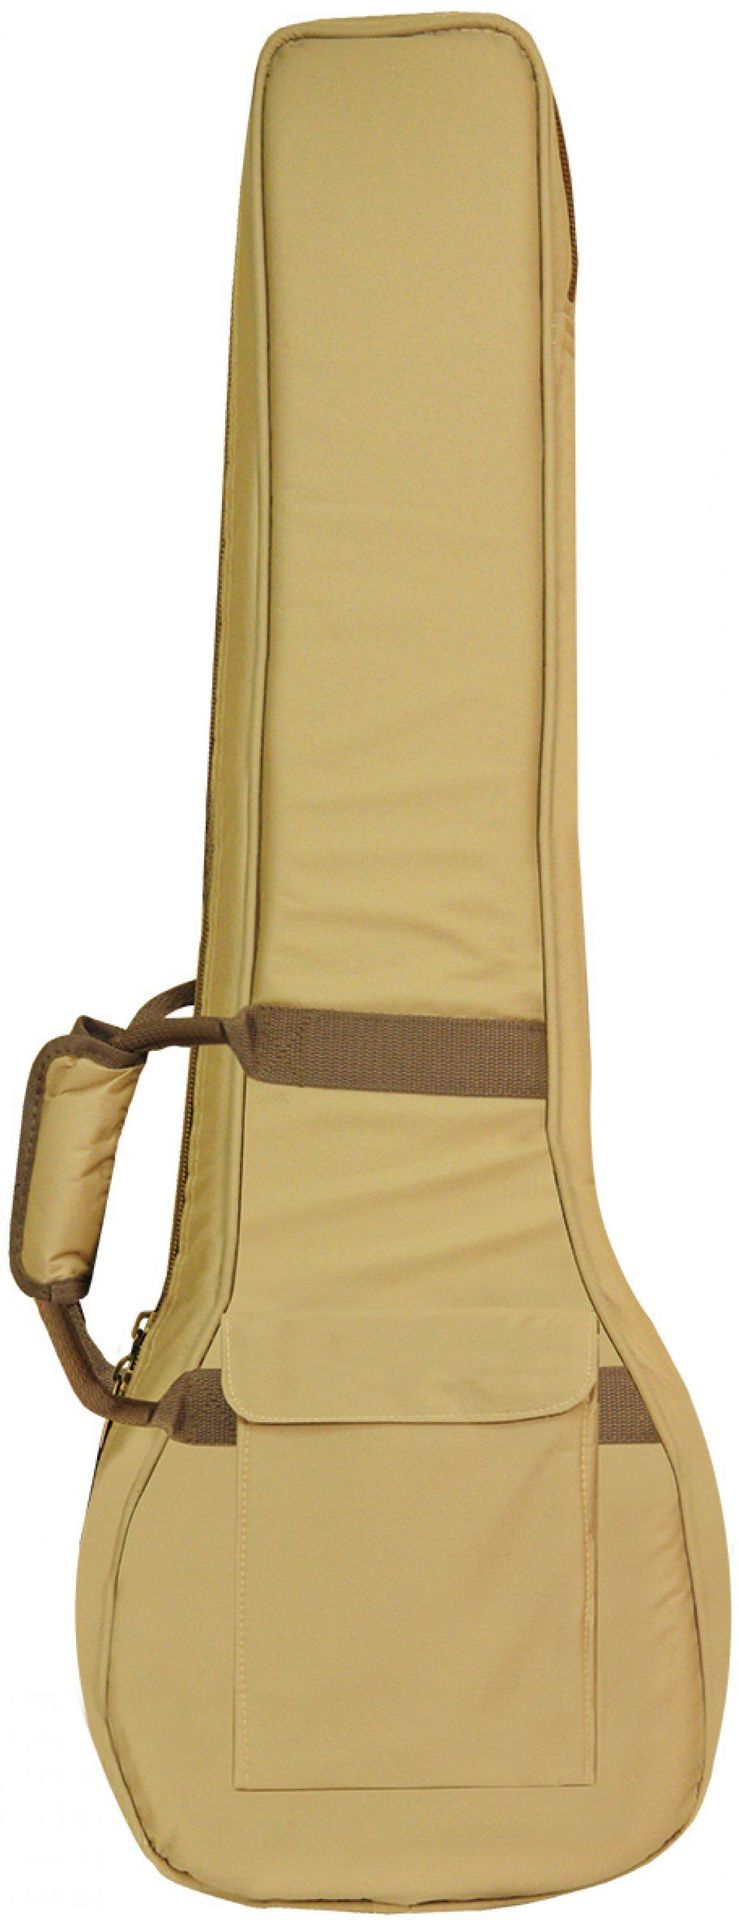 GoldTone EB-5 5-Saiter Elektro-Banjo mit Tasche